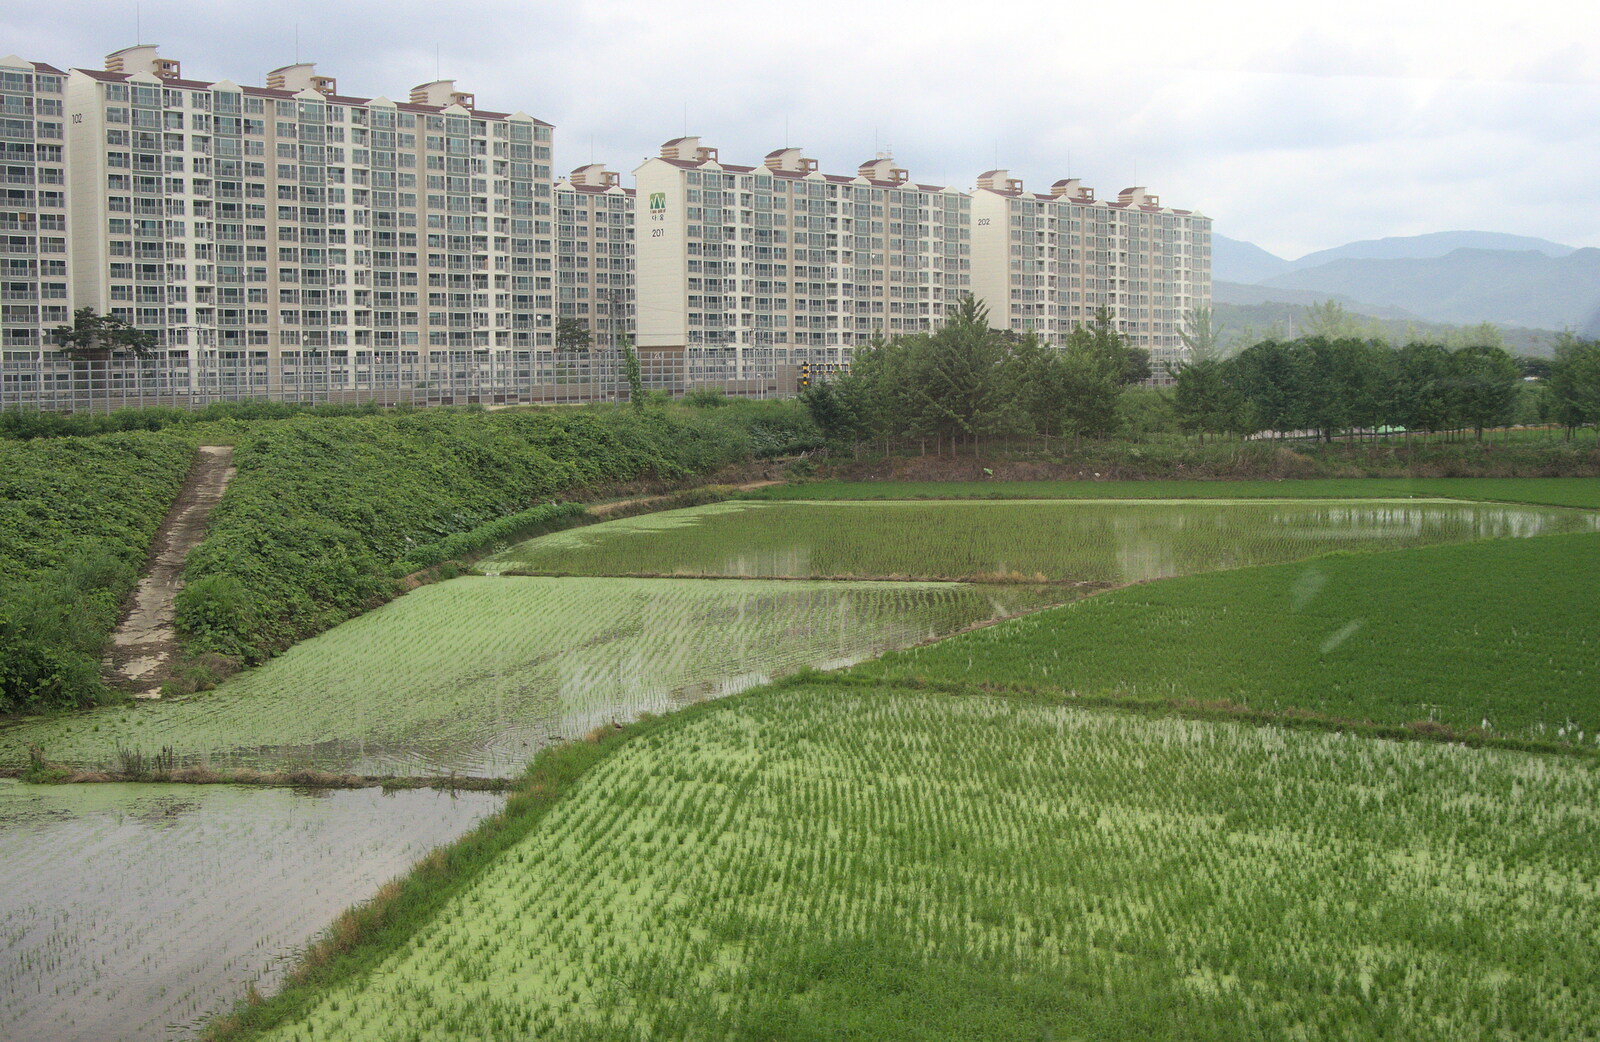 Rice paddy fields on the way to Daegu from Seomun Market, Daegu, South Korea - 1st July 2012